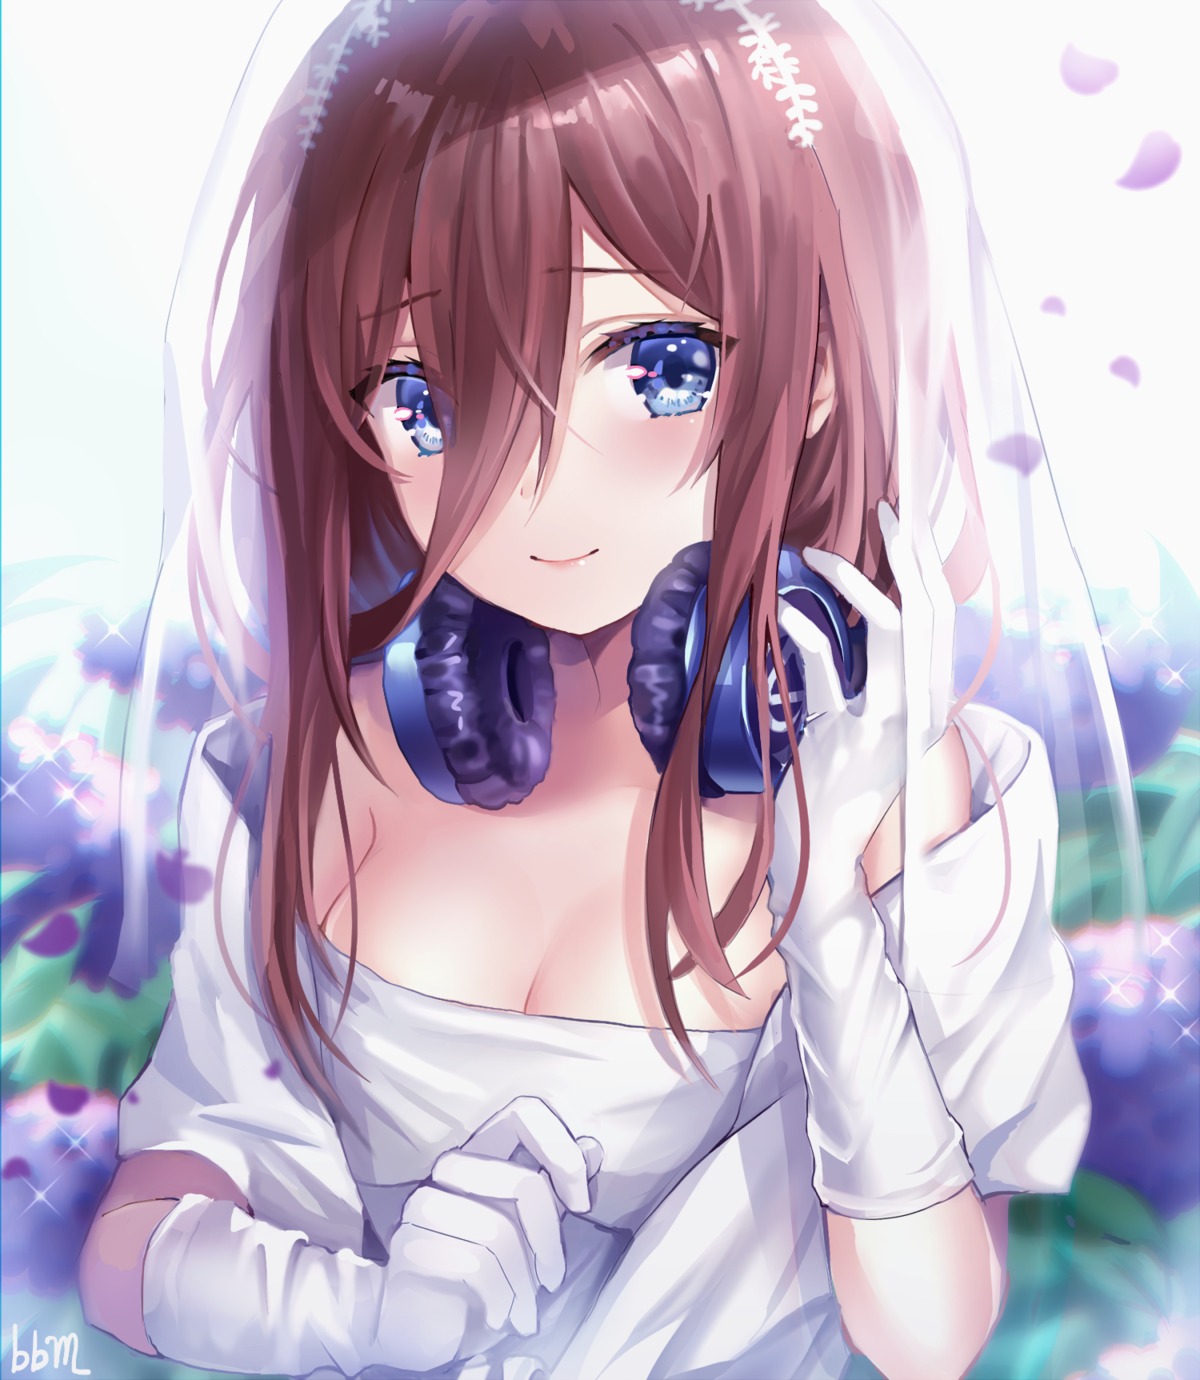 5-toubun_no_hanayome blue_blood_moon cleavage dress headphones nakano_miku wedding_dress